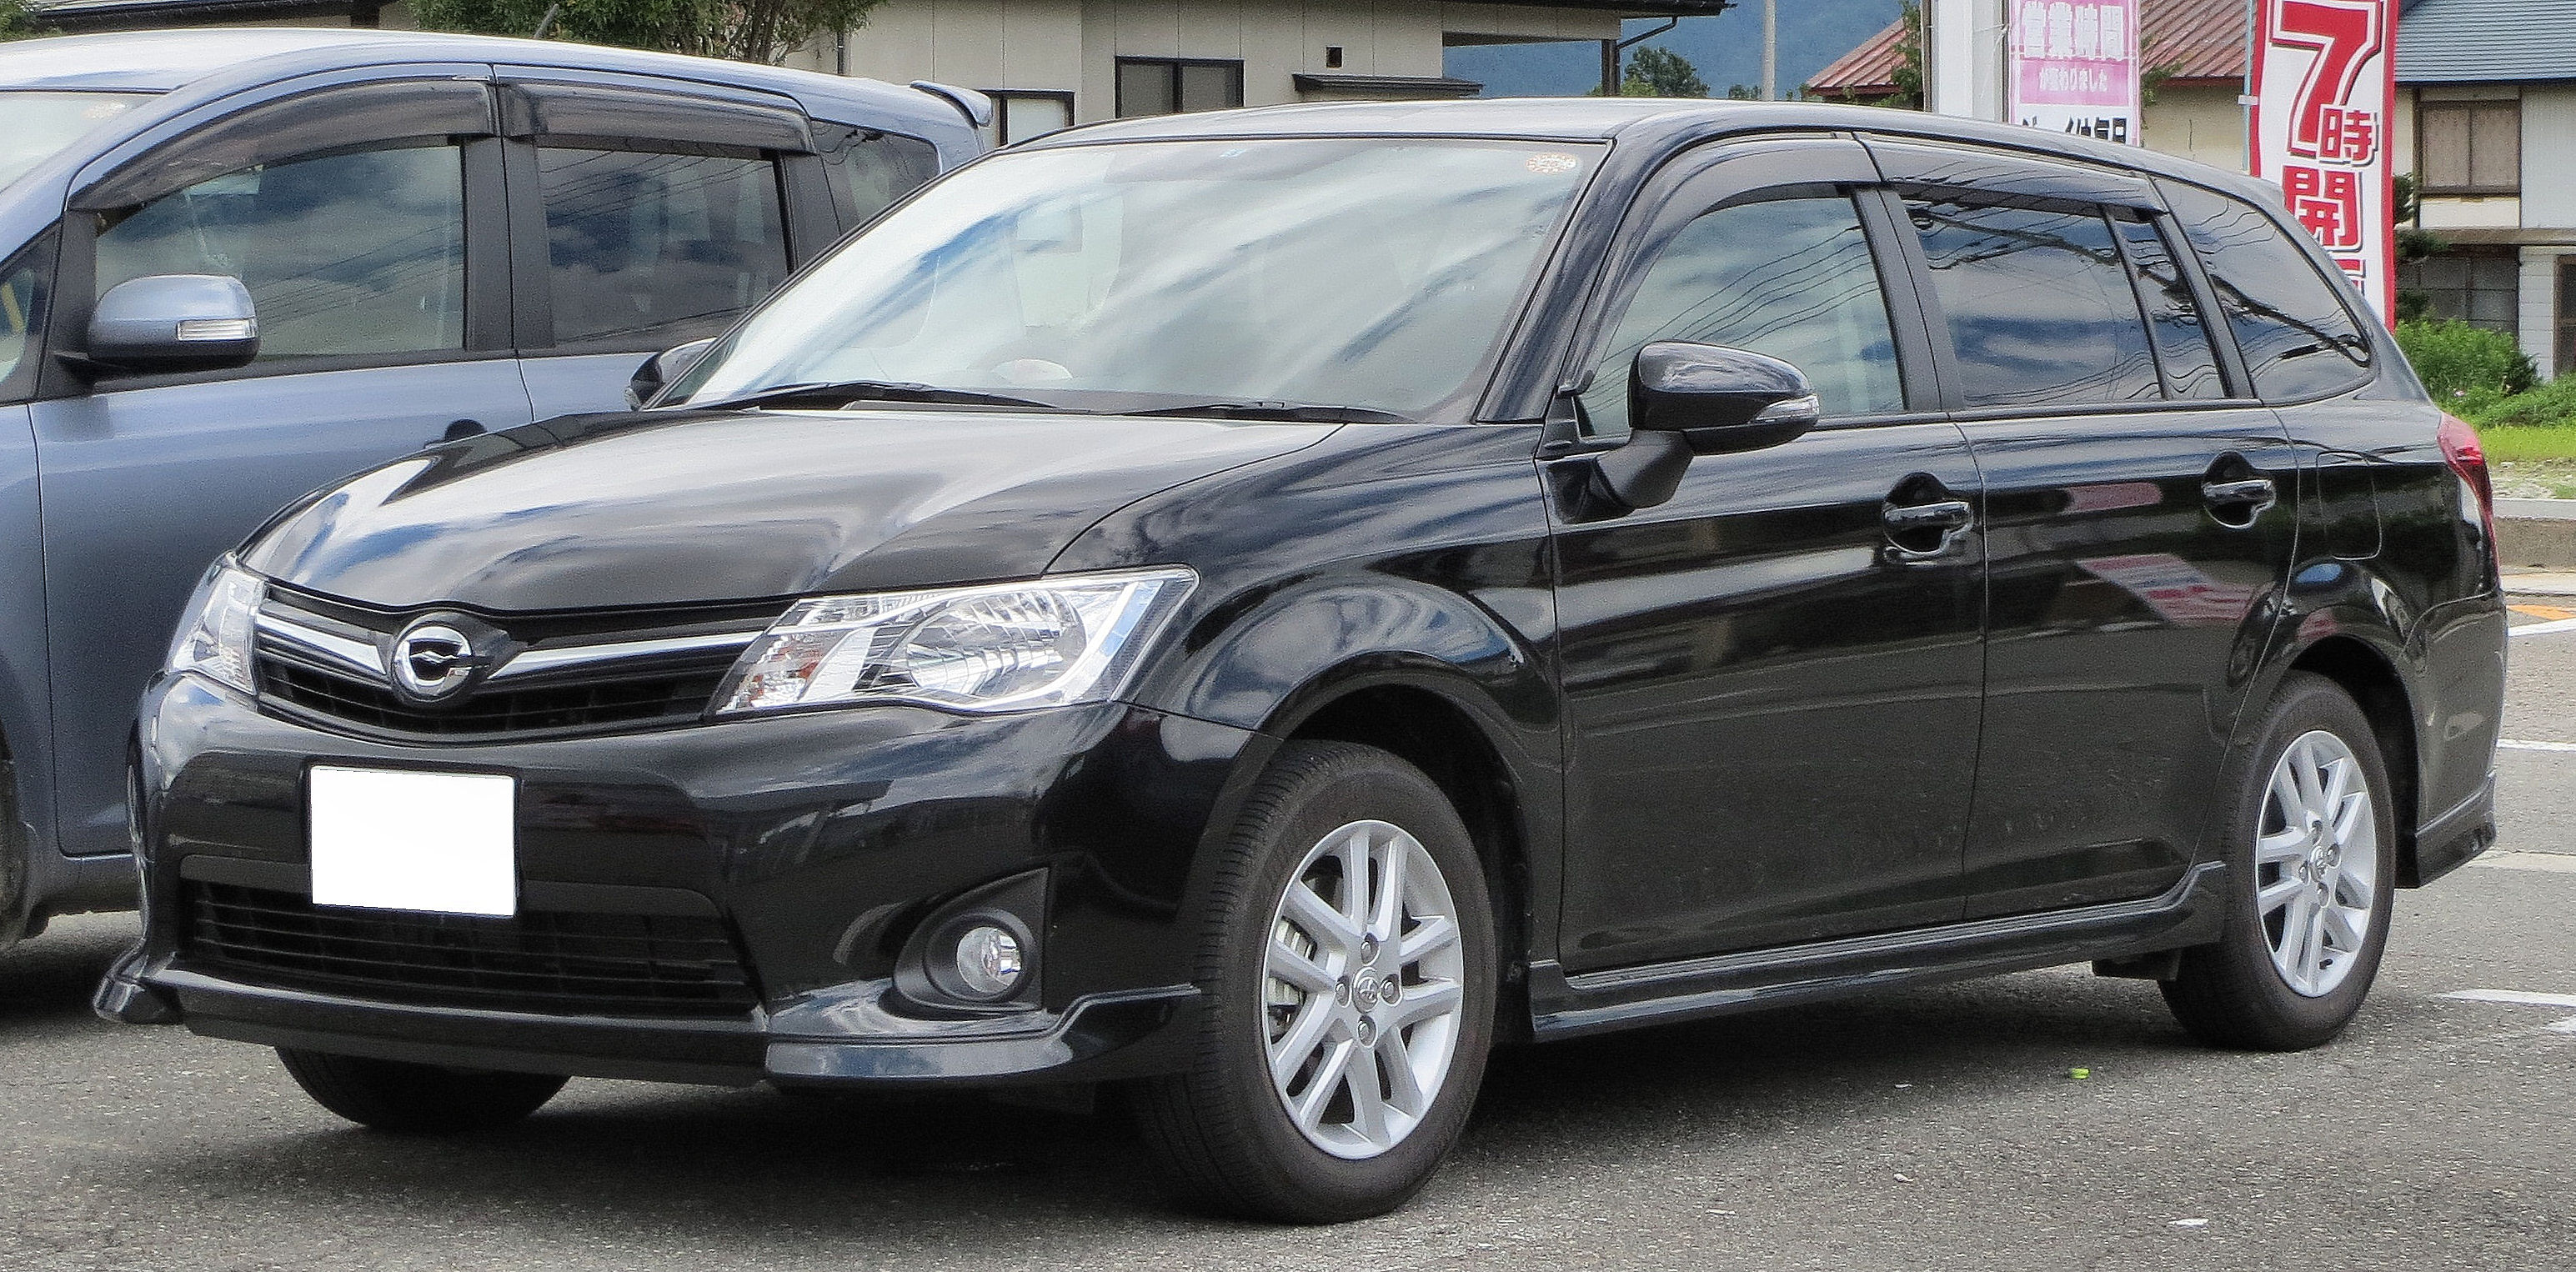 Toyota Corolla Fielder Exterior Side View